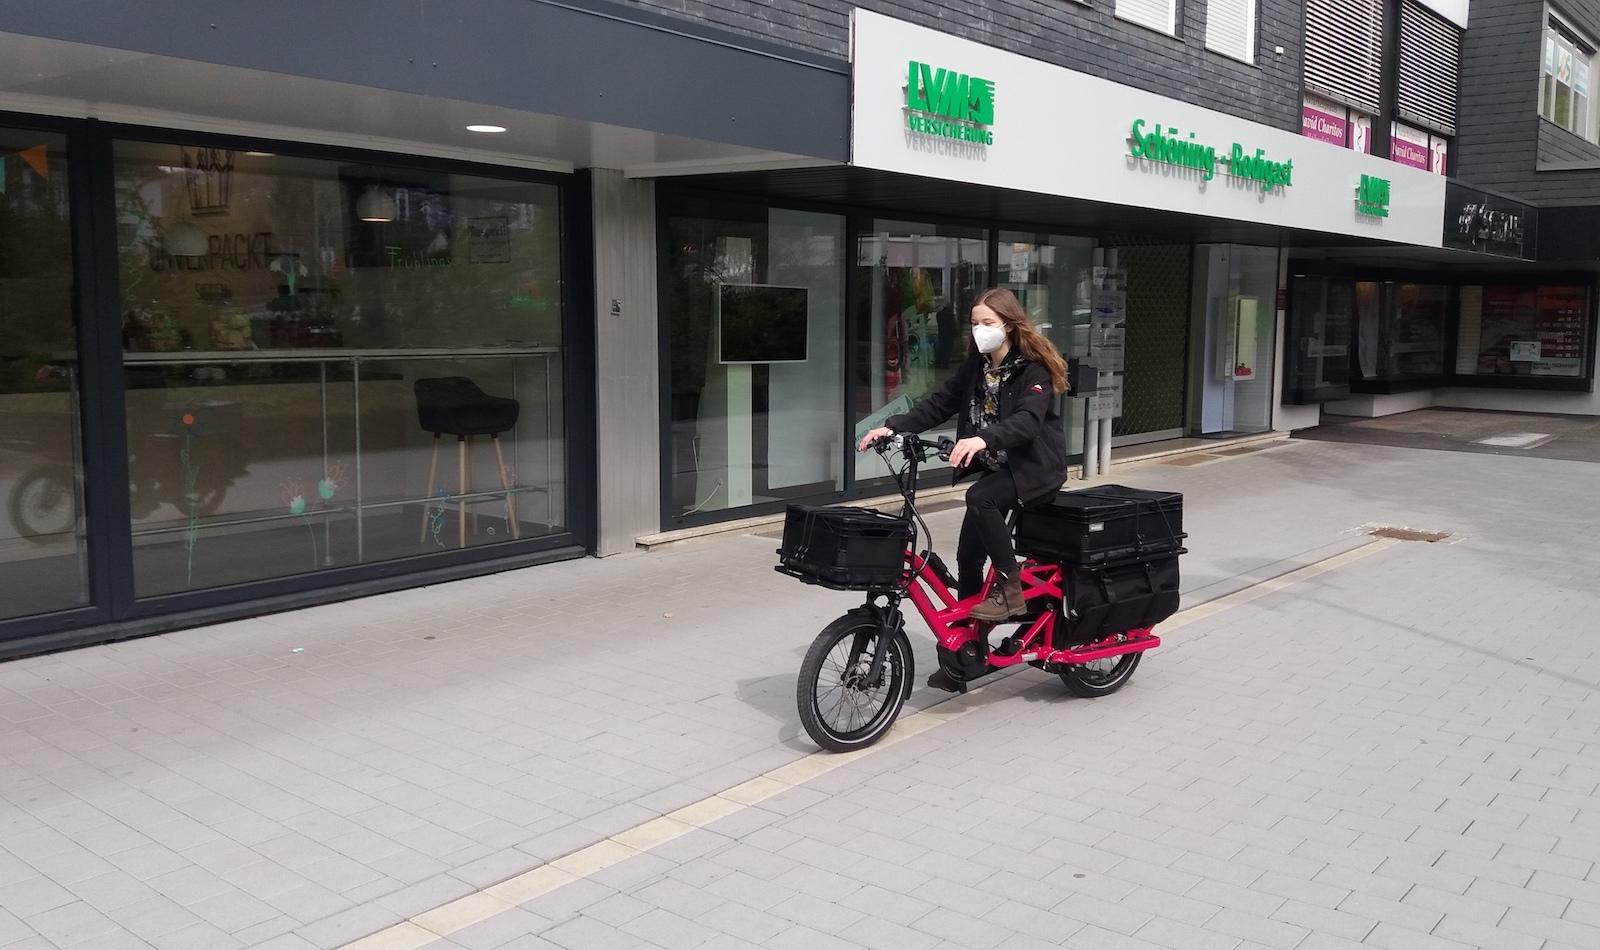 German City Creates E-Cargo Bike Converts through Free Rides Program